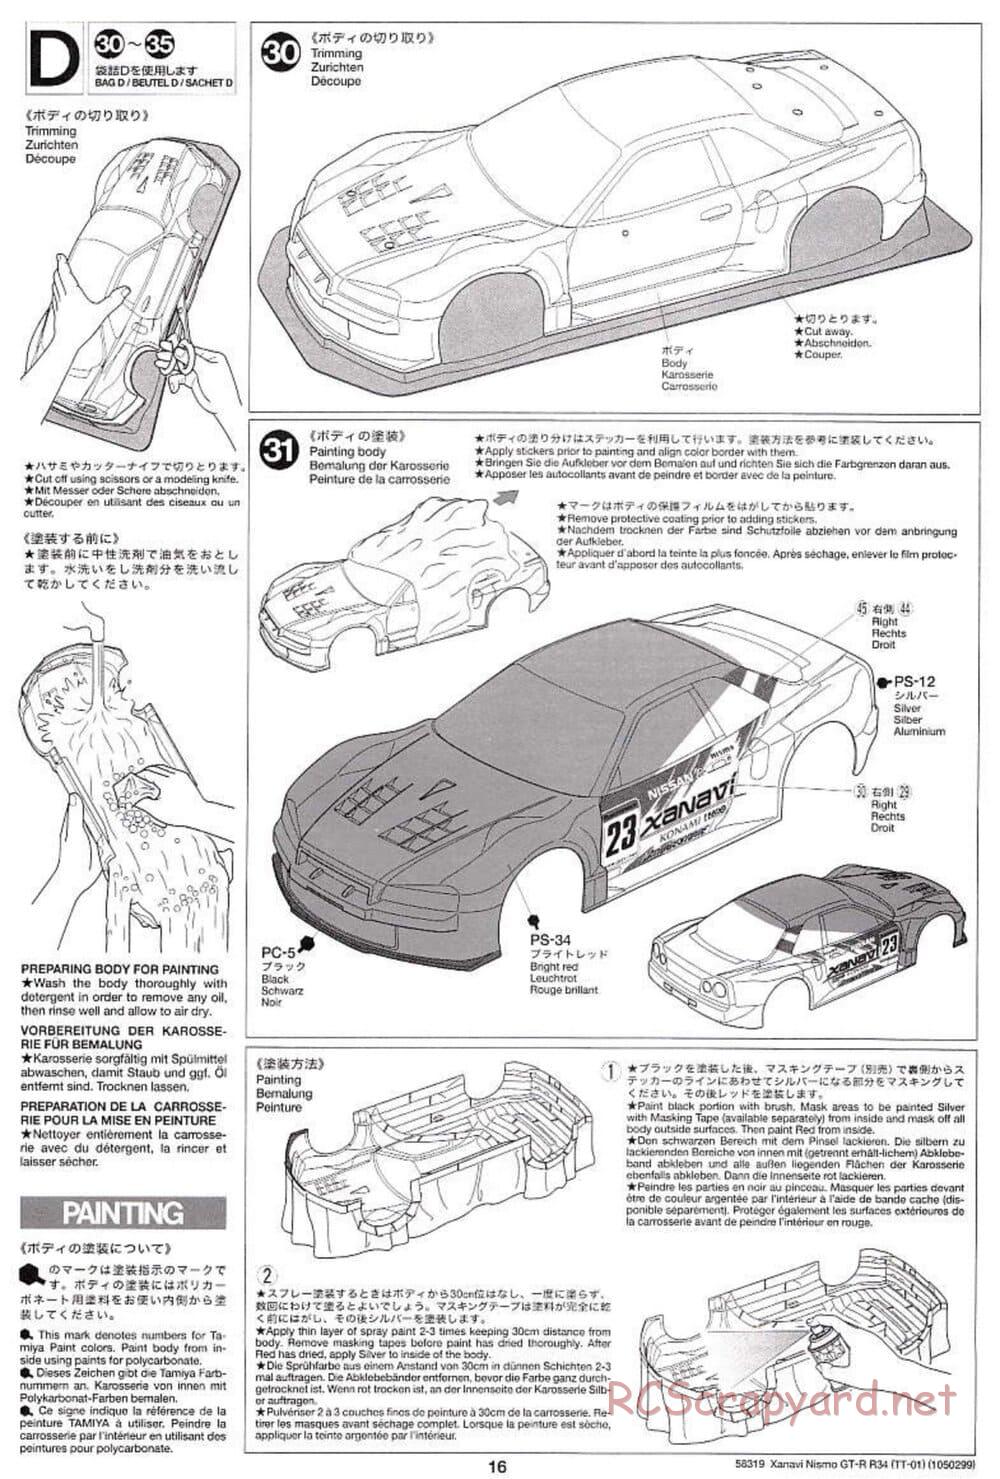 Tamiya - Xanavi Nismo GT-R R34 - TT-01 Chassis - Manual - Page 16